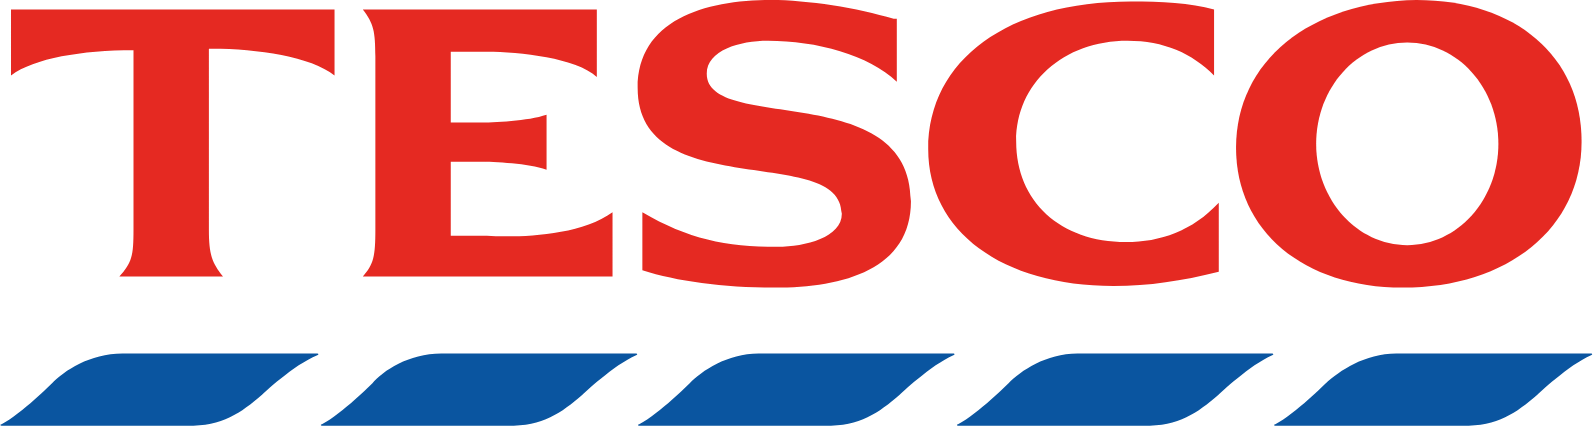 Tesco logo large (transparent PNG)